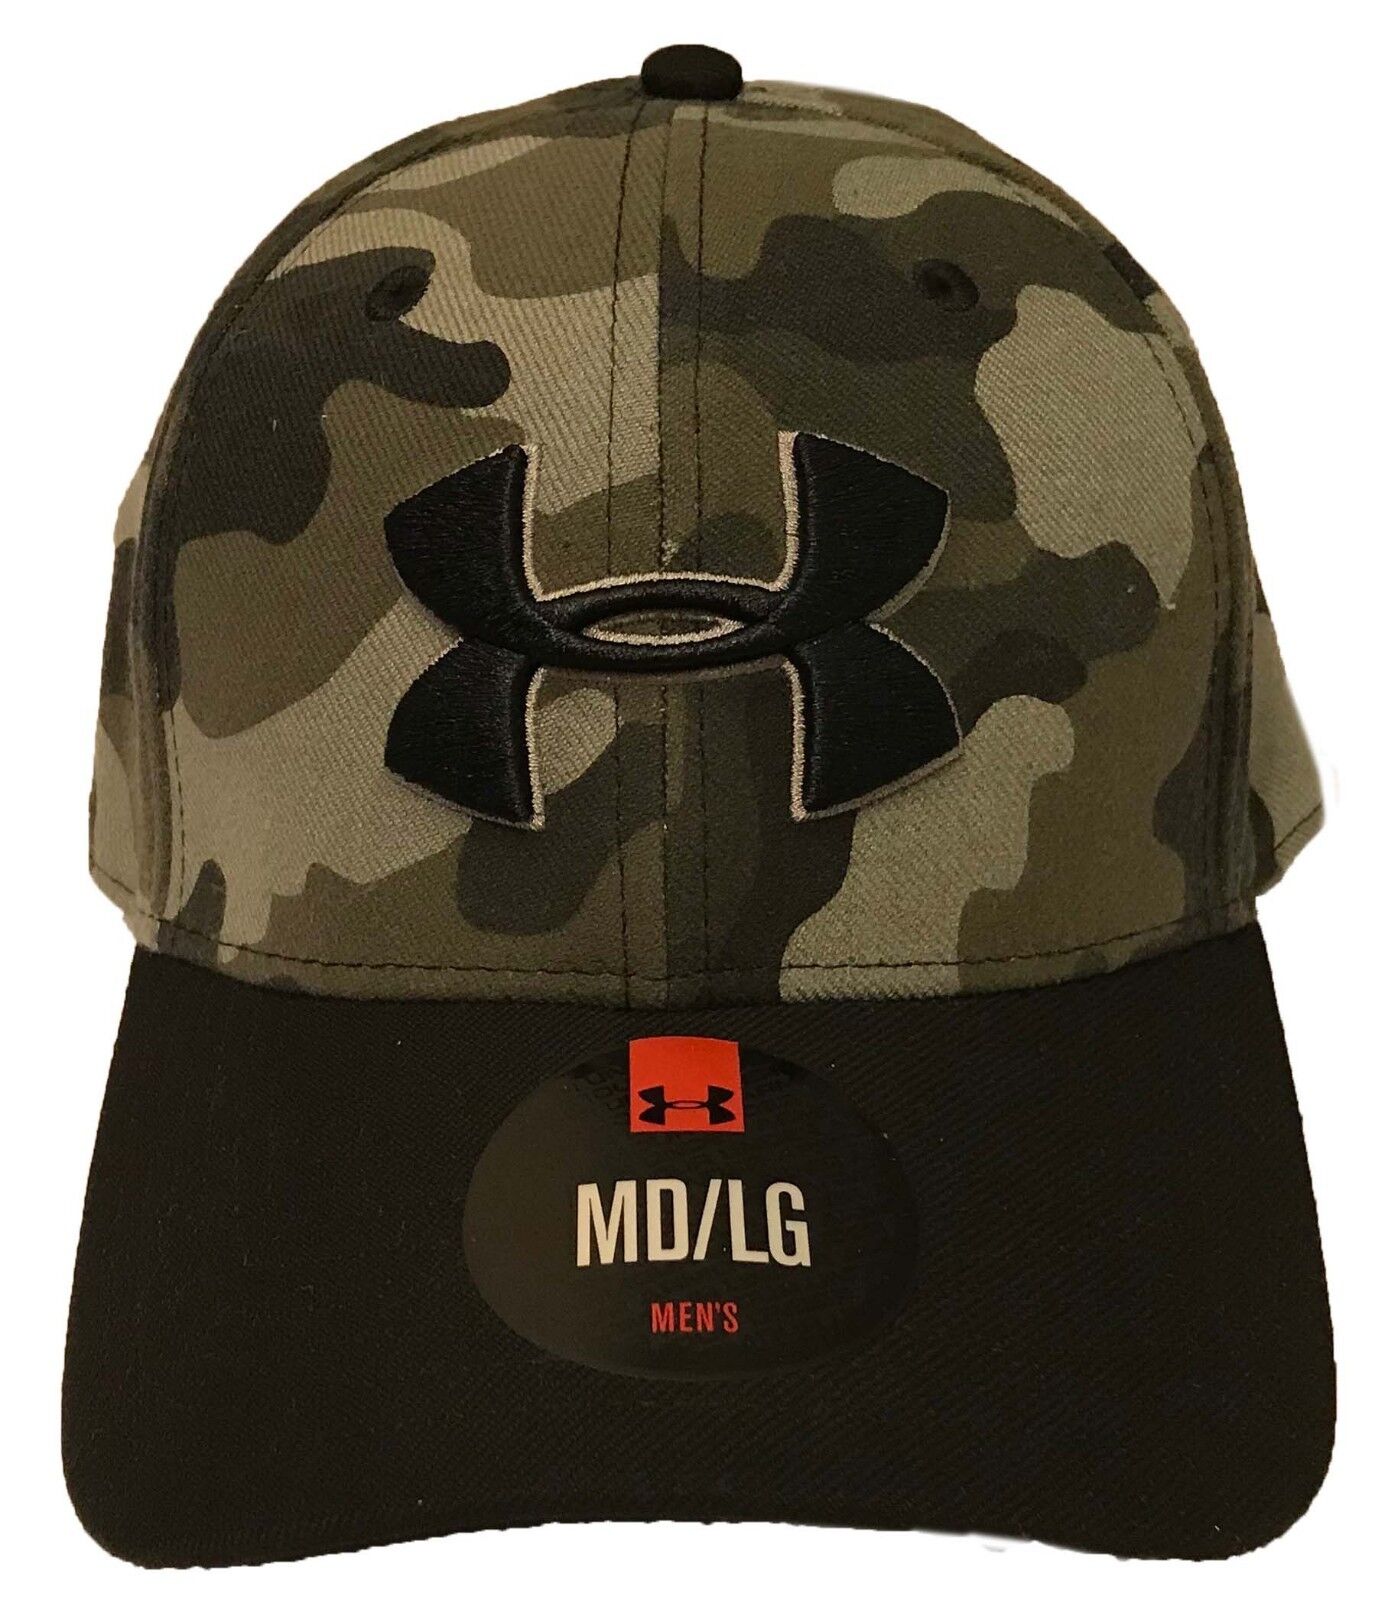 New Men's Under Armour Stretch Fit Hat Flex Cap : Size M/L, LG/XL, XL/2XL